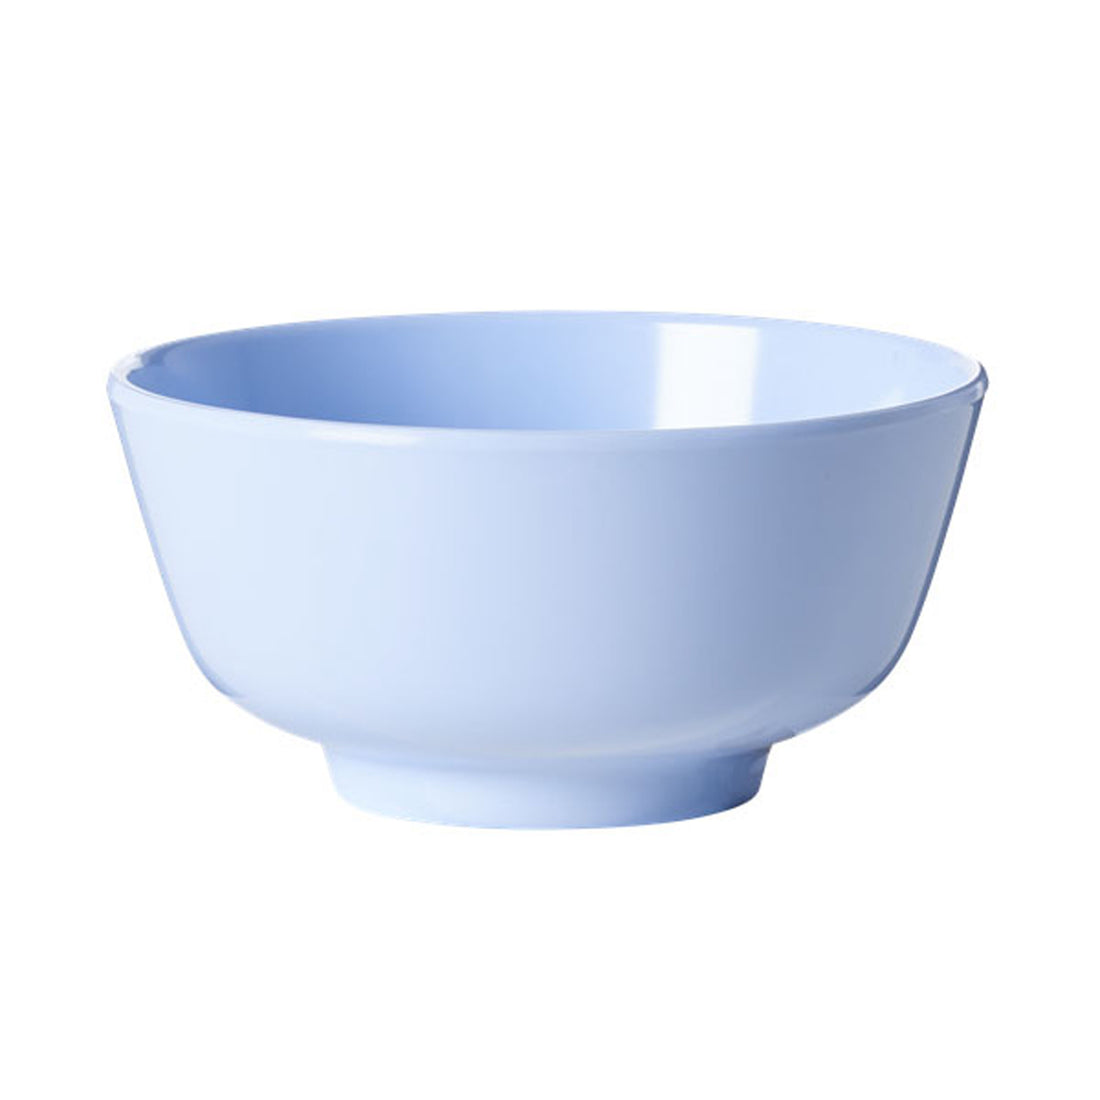 rice-dk-6-melamine-dipping-bowls-shine-colors- (5)